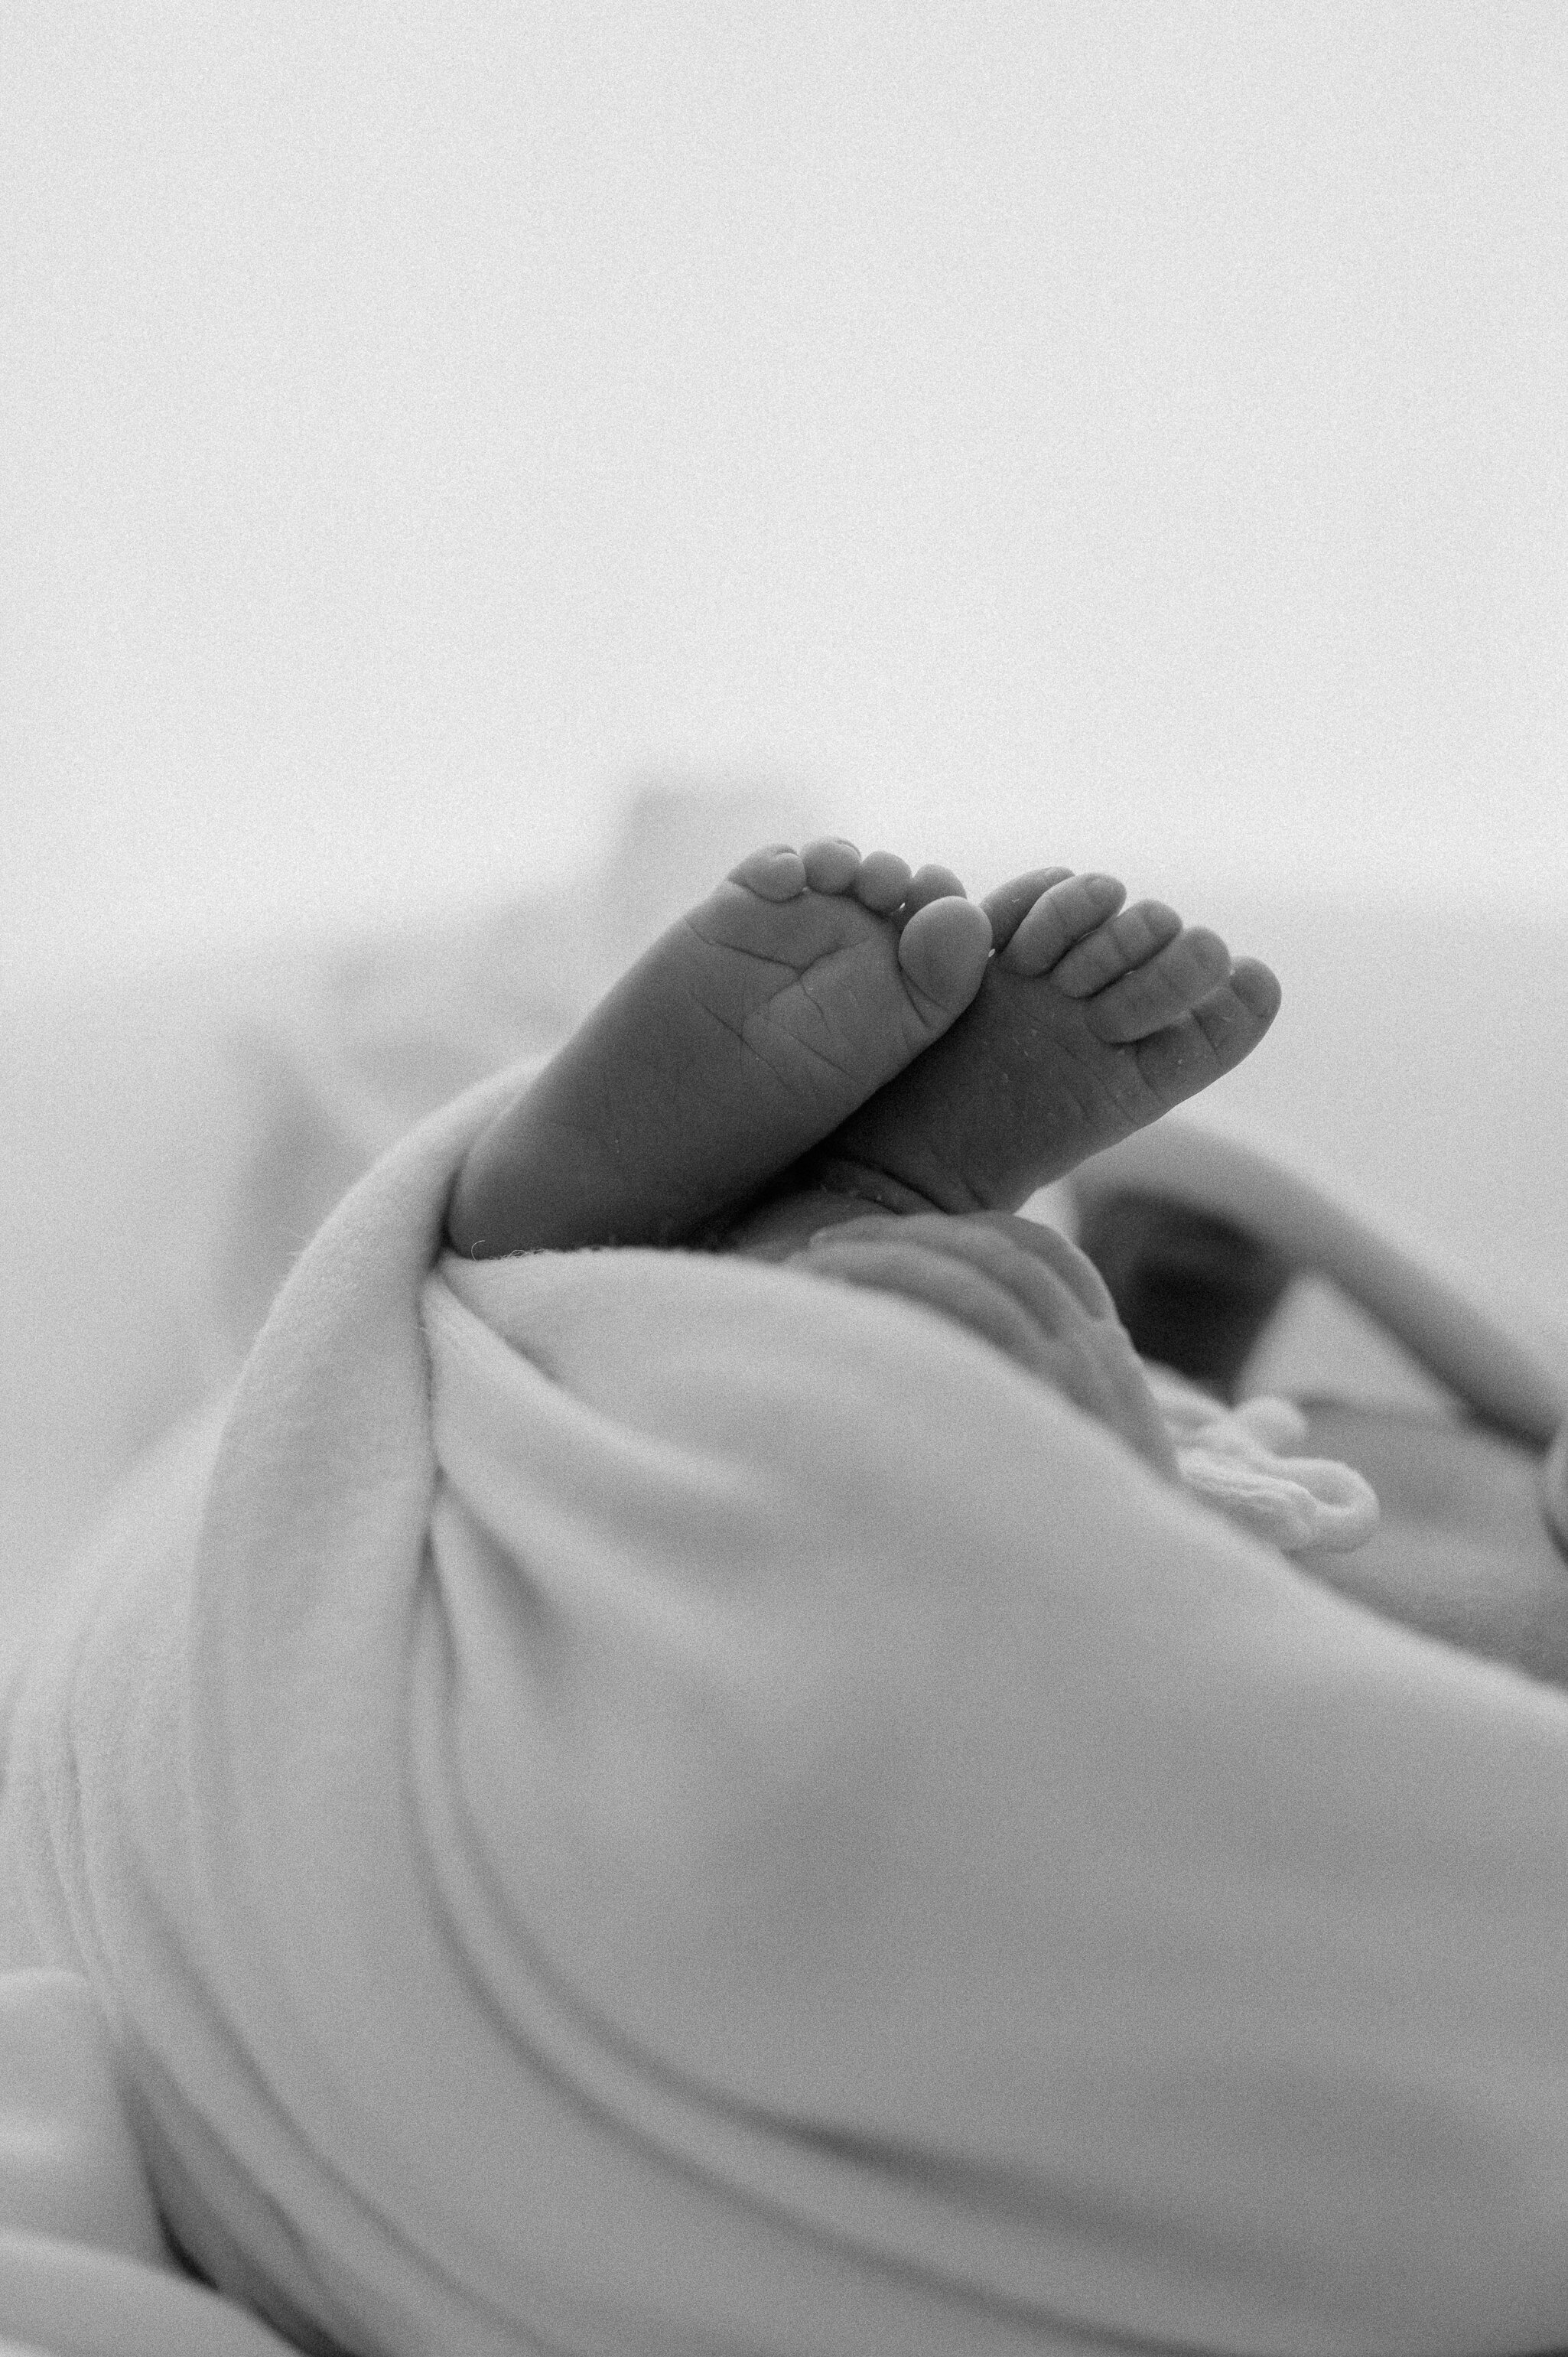 newborn baby feet taken at York studio by newborn photographer